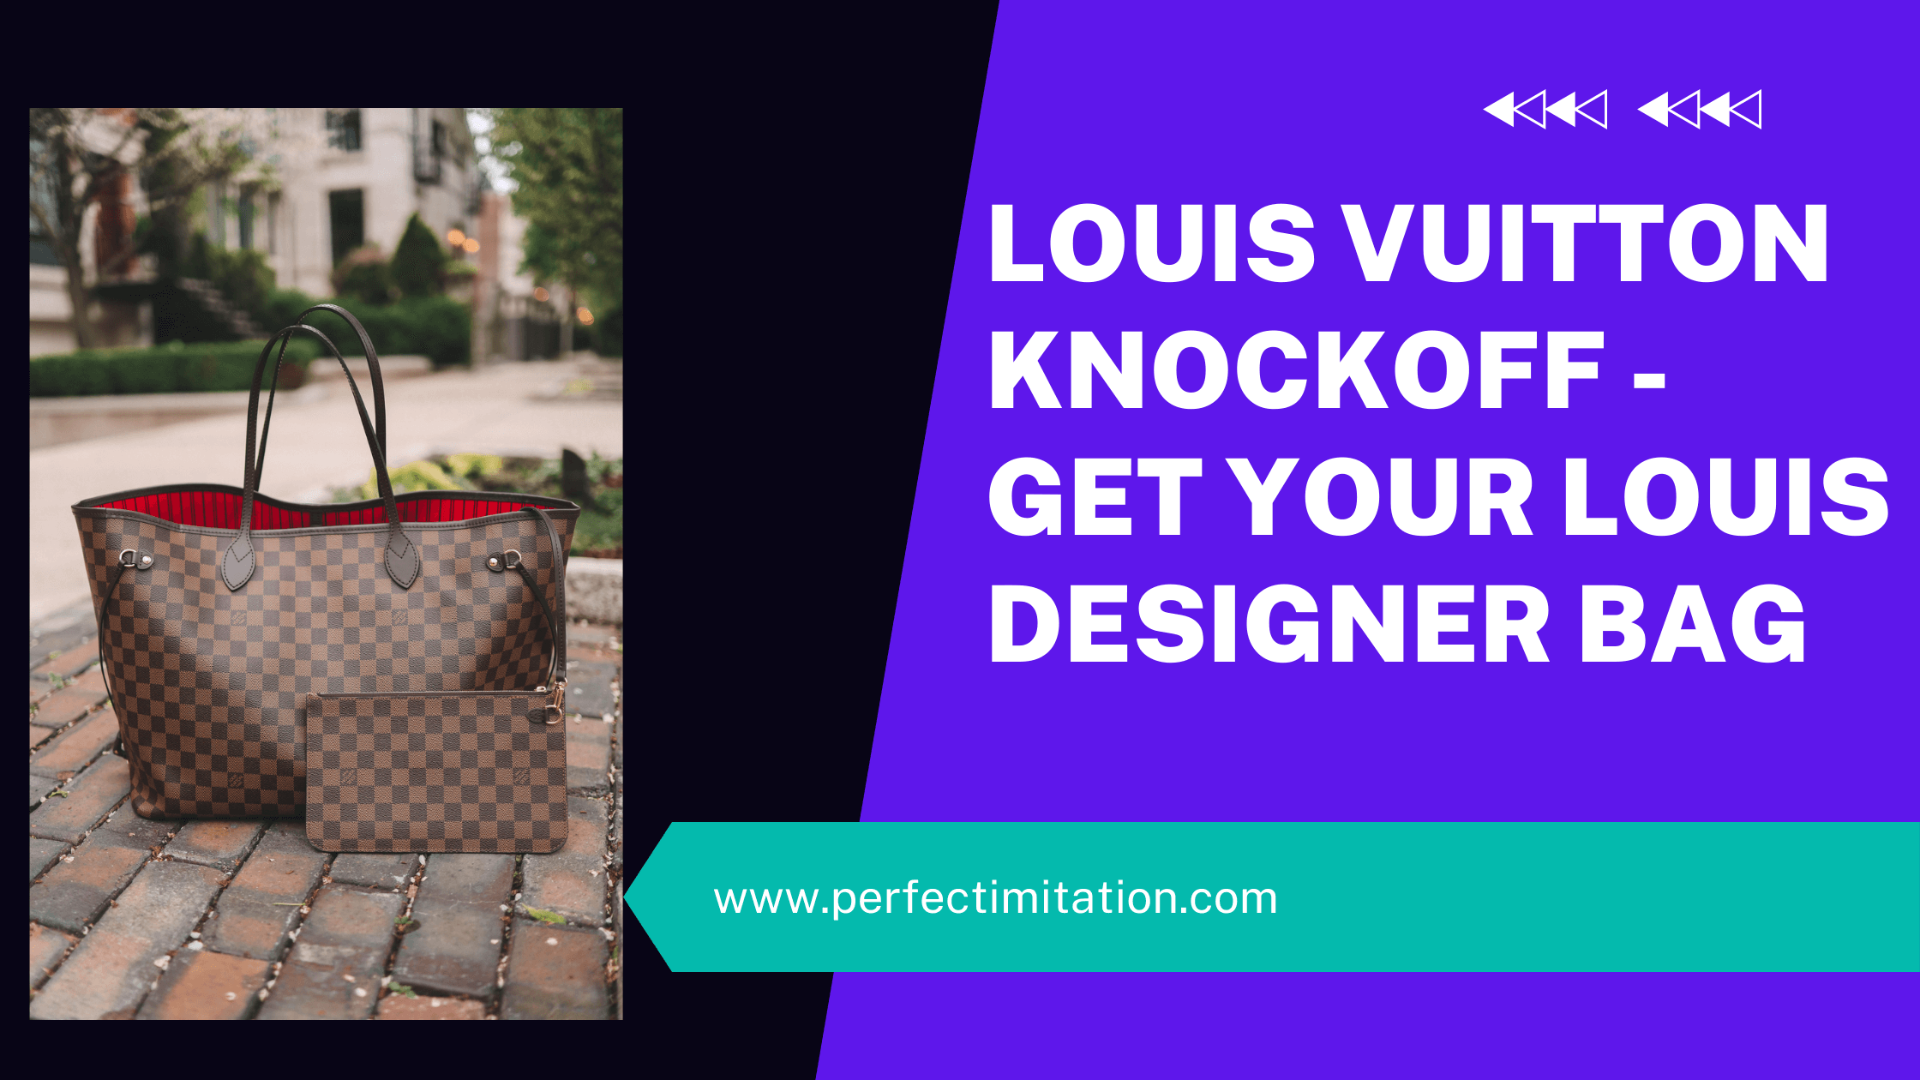 Louis Vuitton Knockoff-Get your louis designer Bag1.png